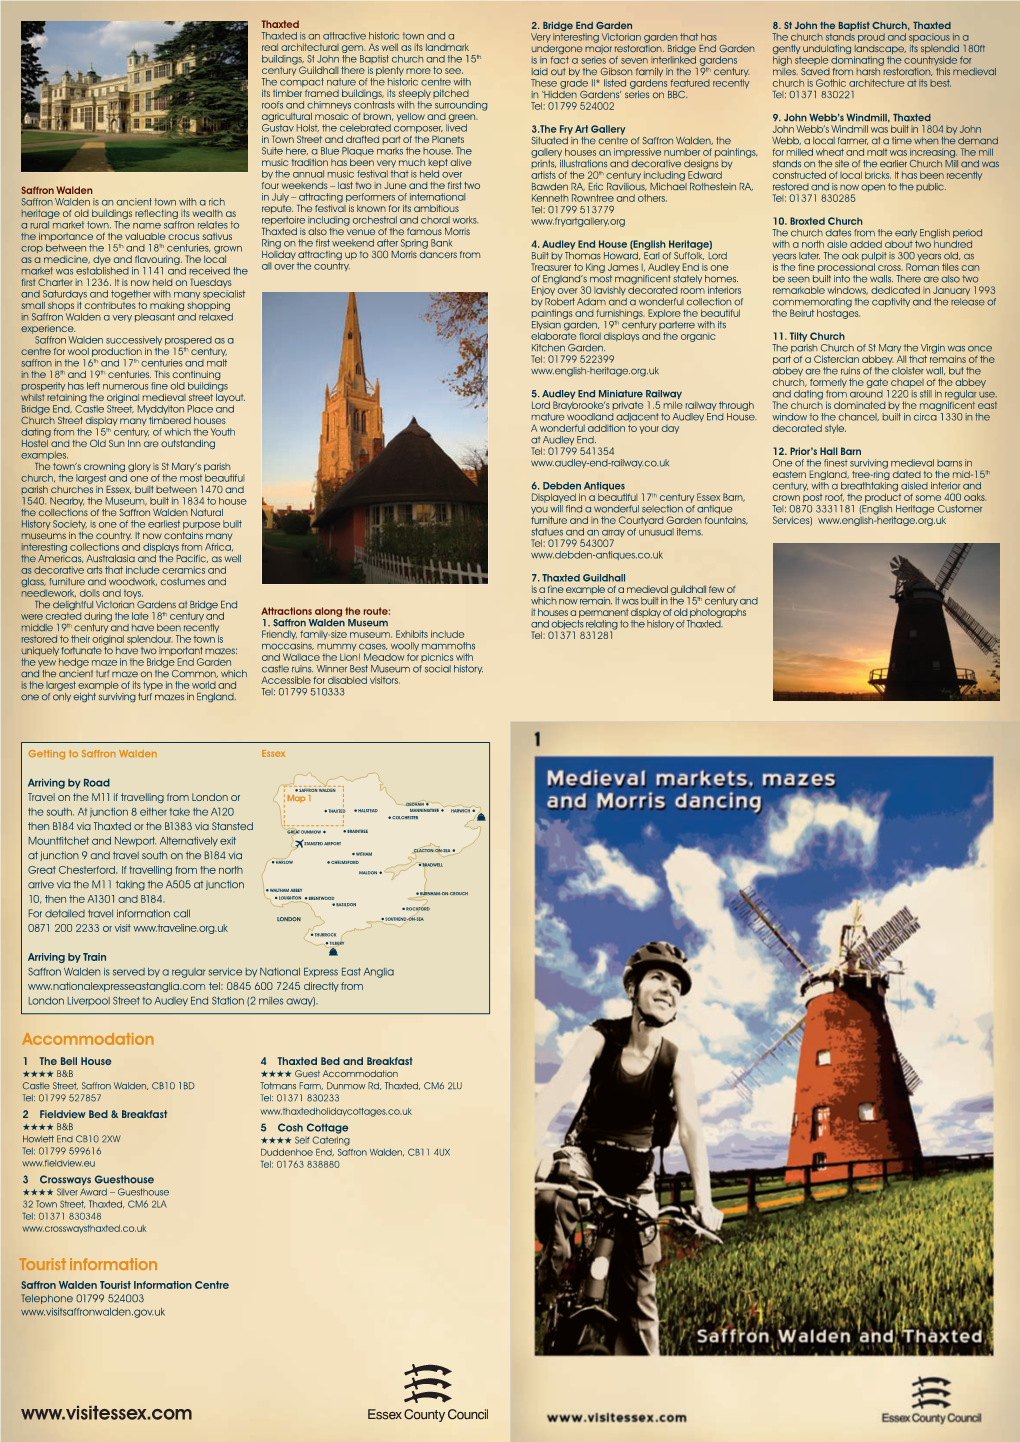 PDF of Medieval Markets, Mazes & Morris Dancing